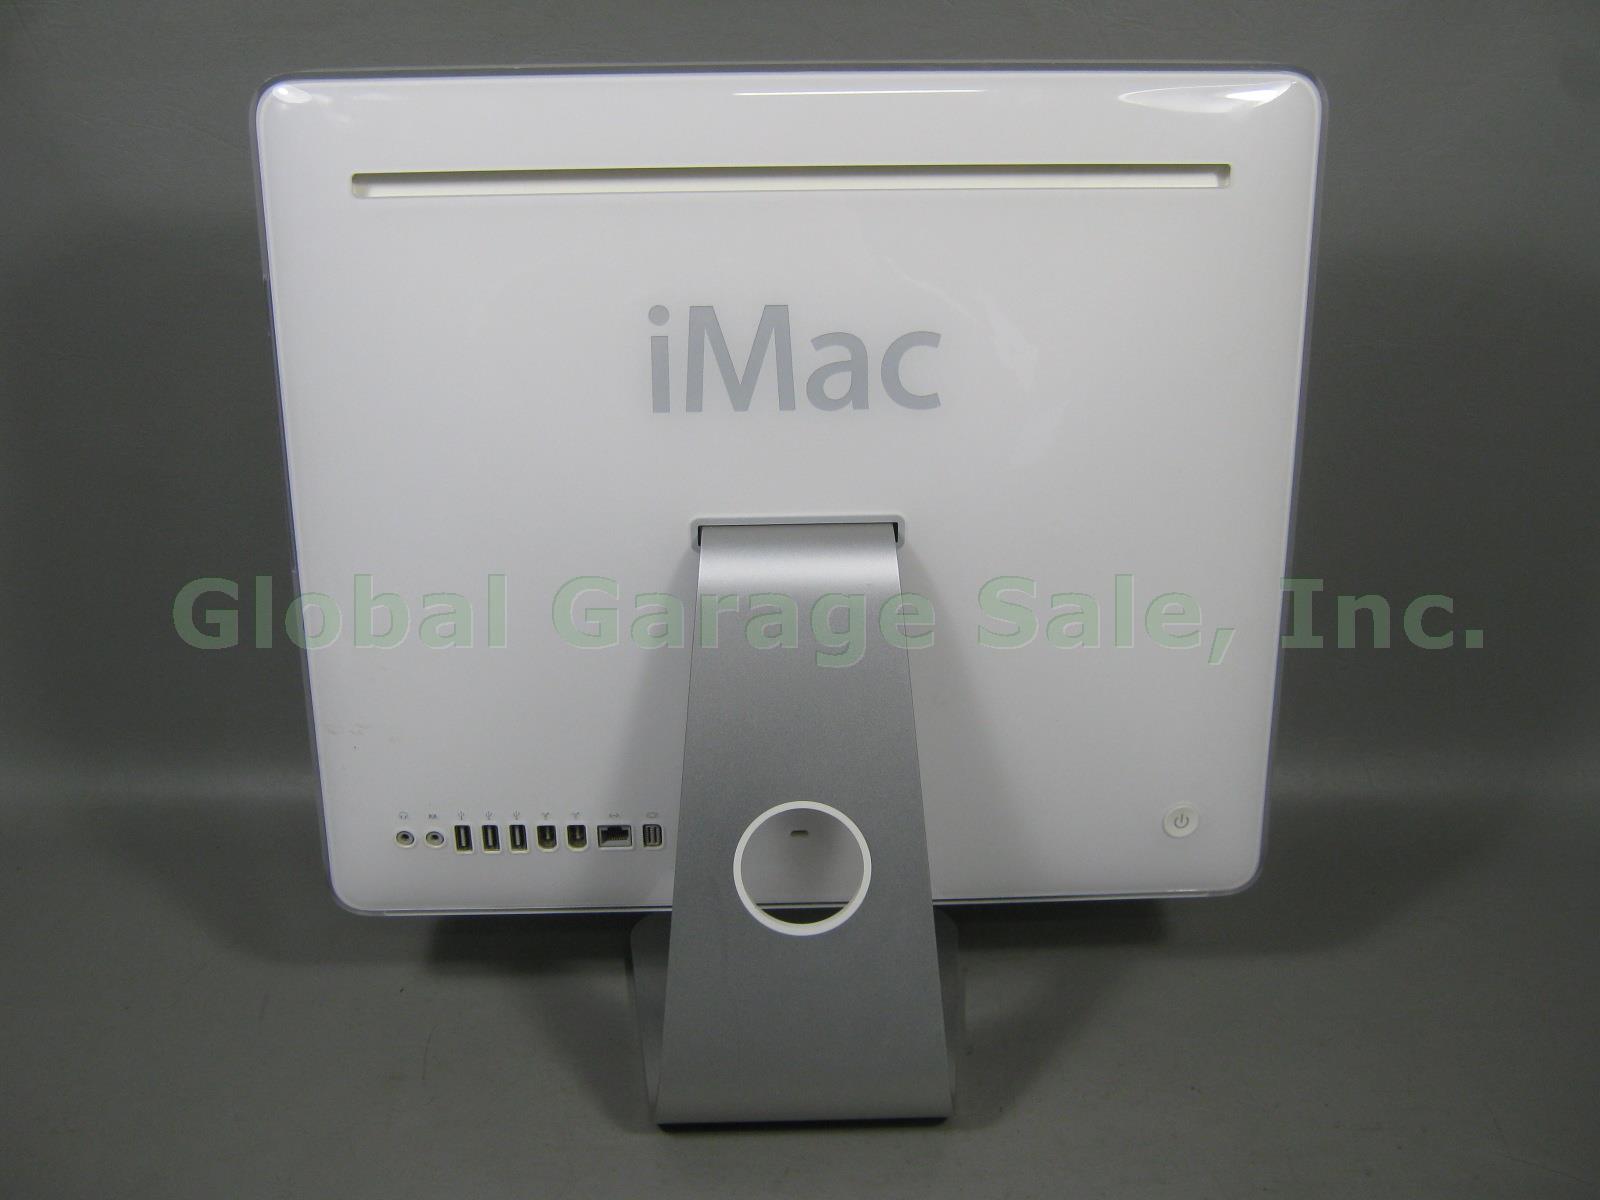 Apple 17" iMac A1195 Intel Core 2 Duo 1.83GHz 1GB 160GB Combo W/ Keyboard Mouse 5